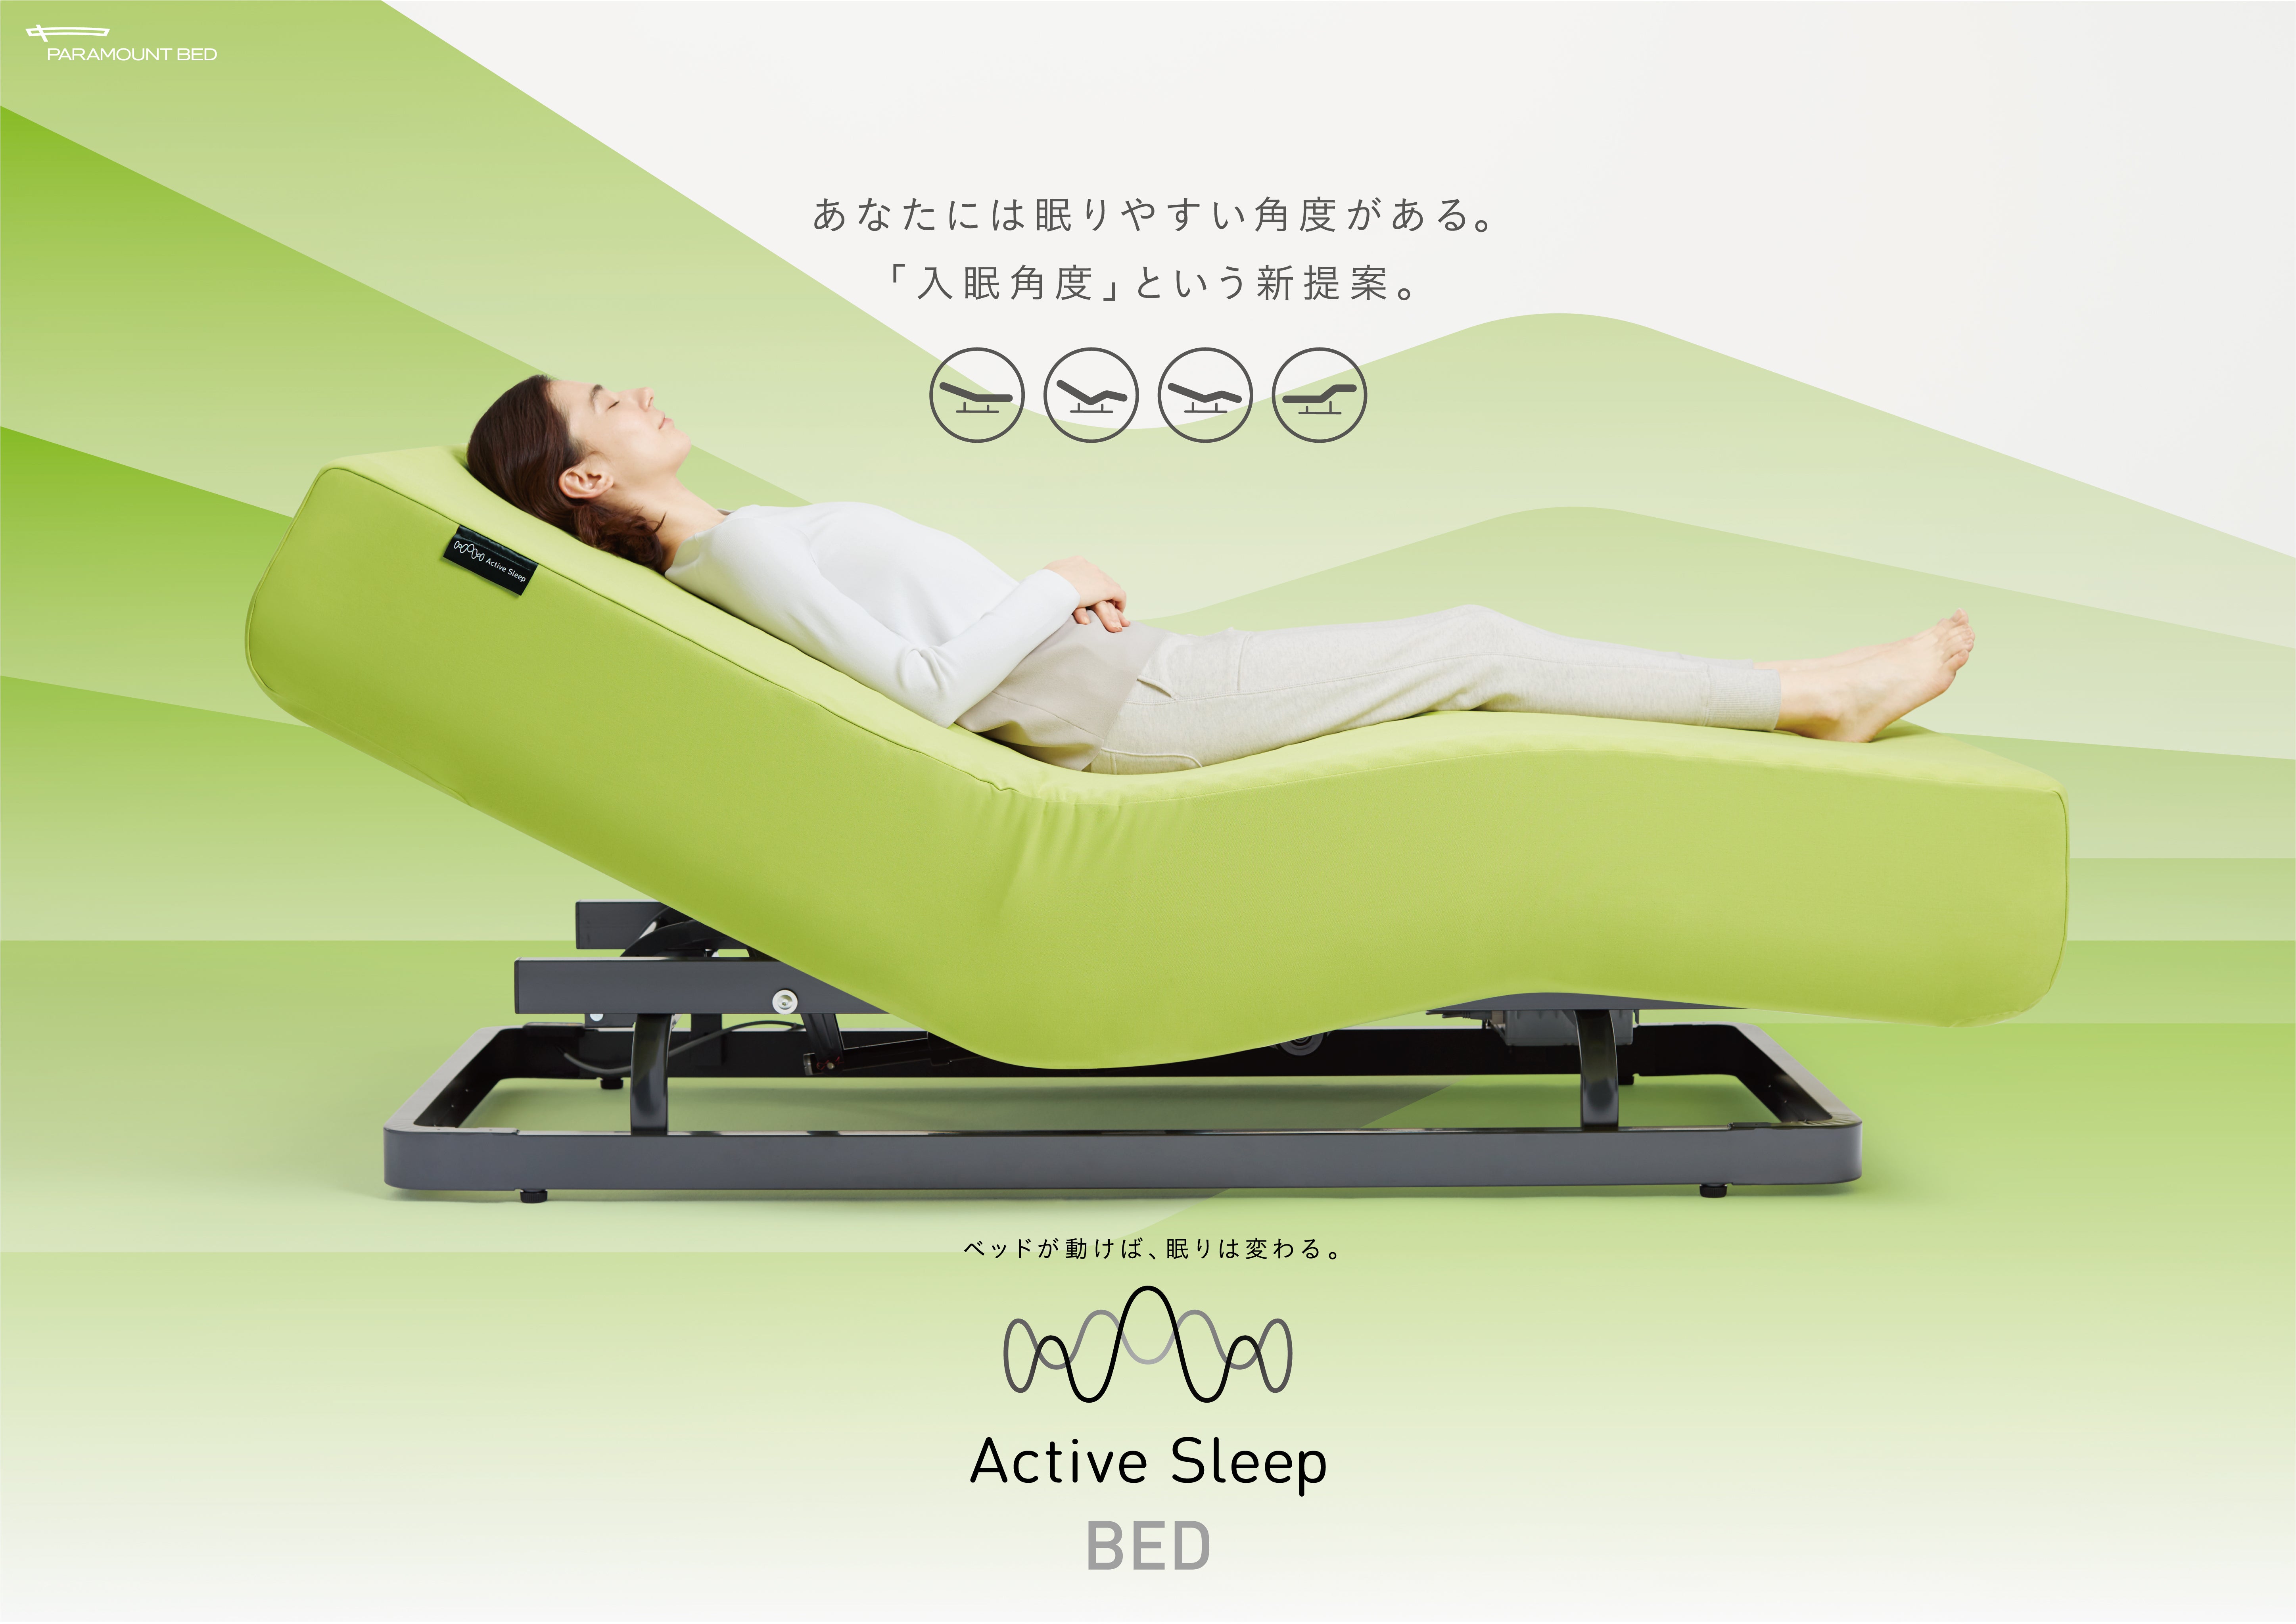 Active Sleep Bed
テレビCM放映中
